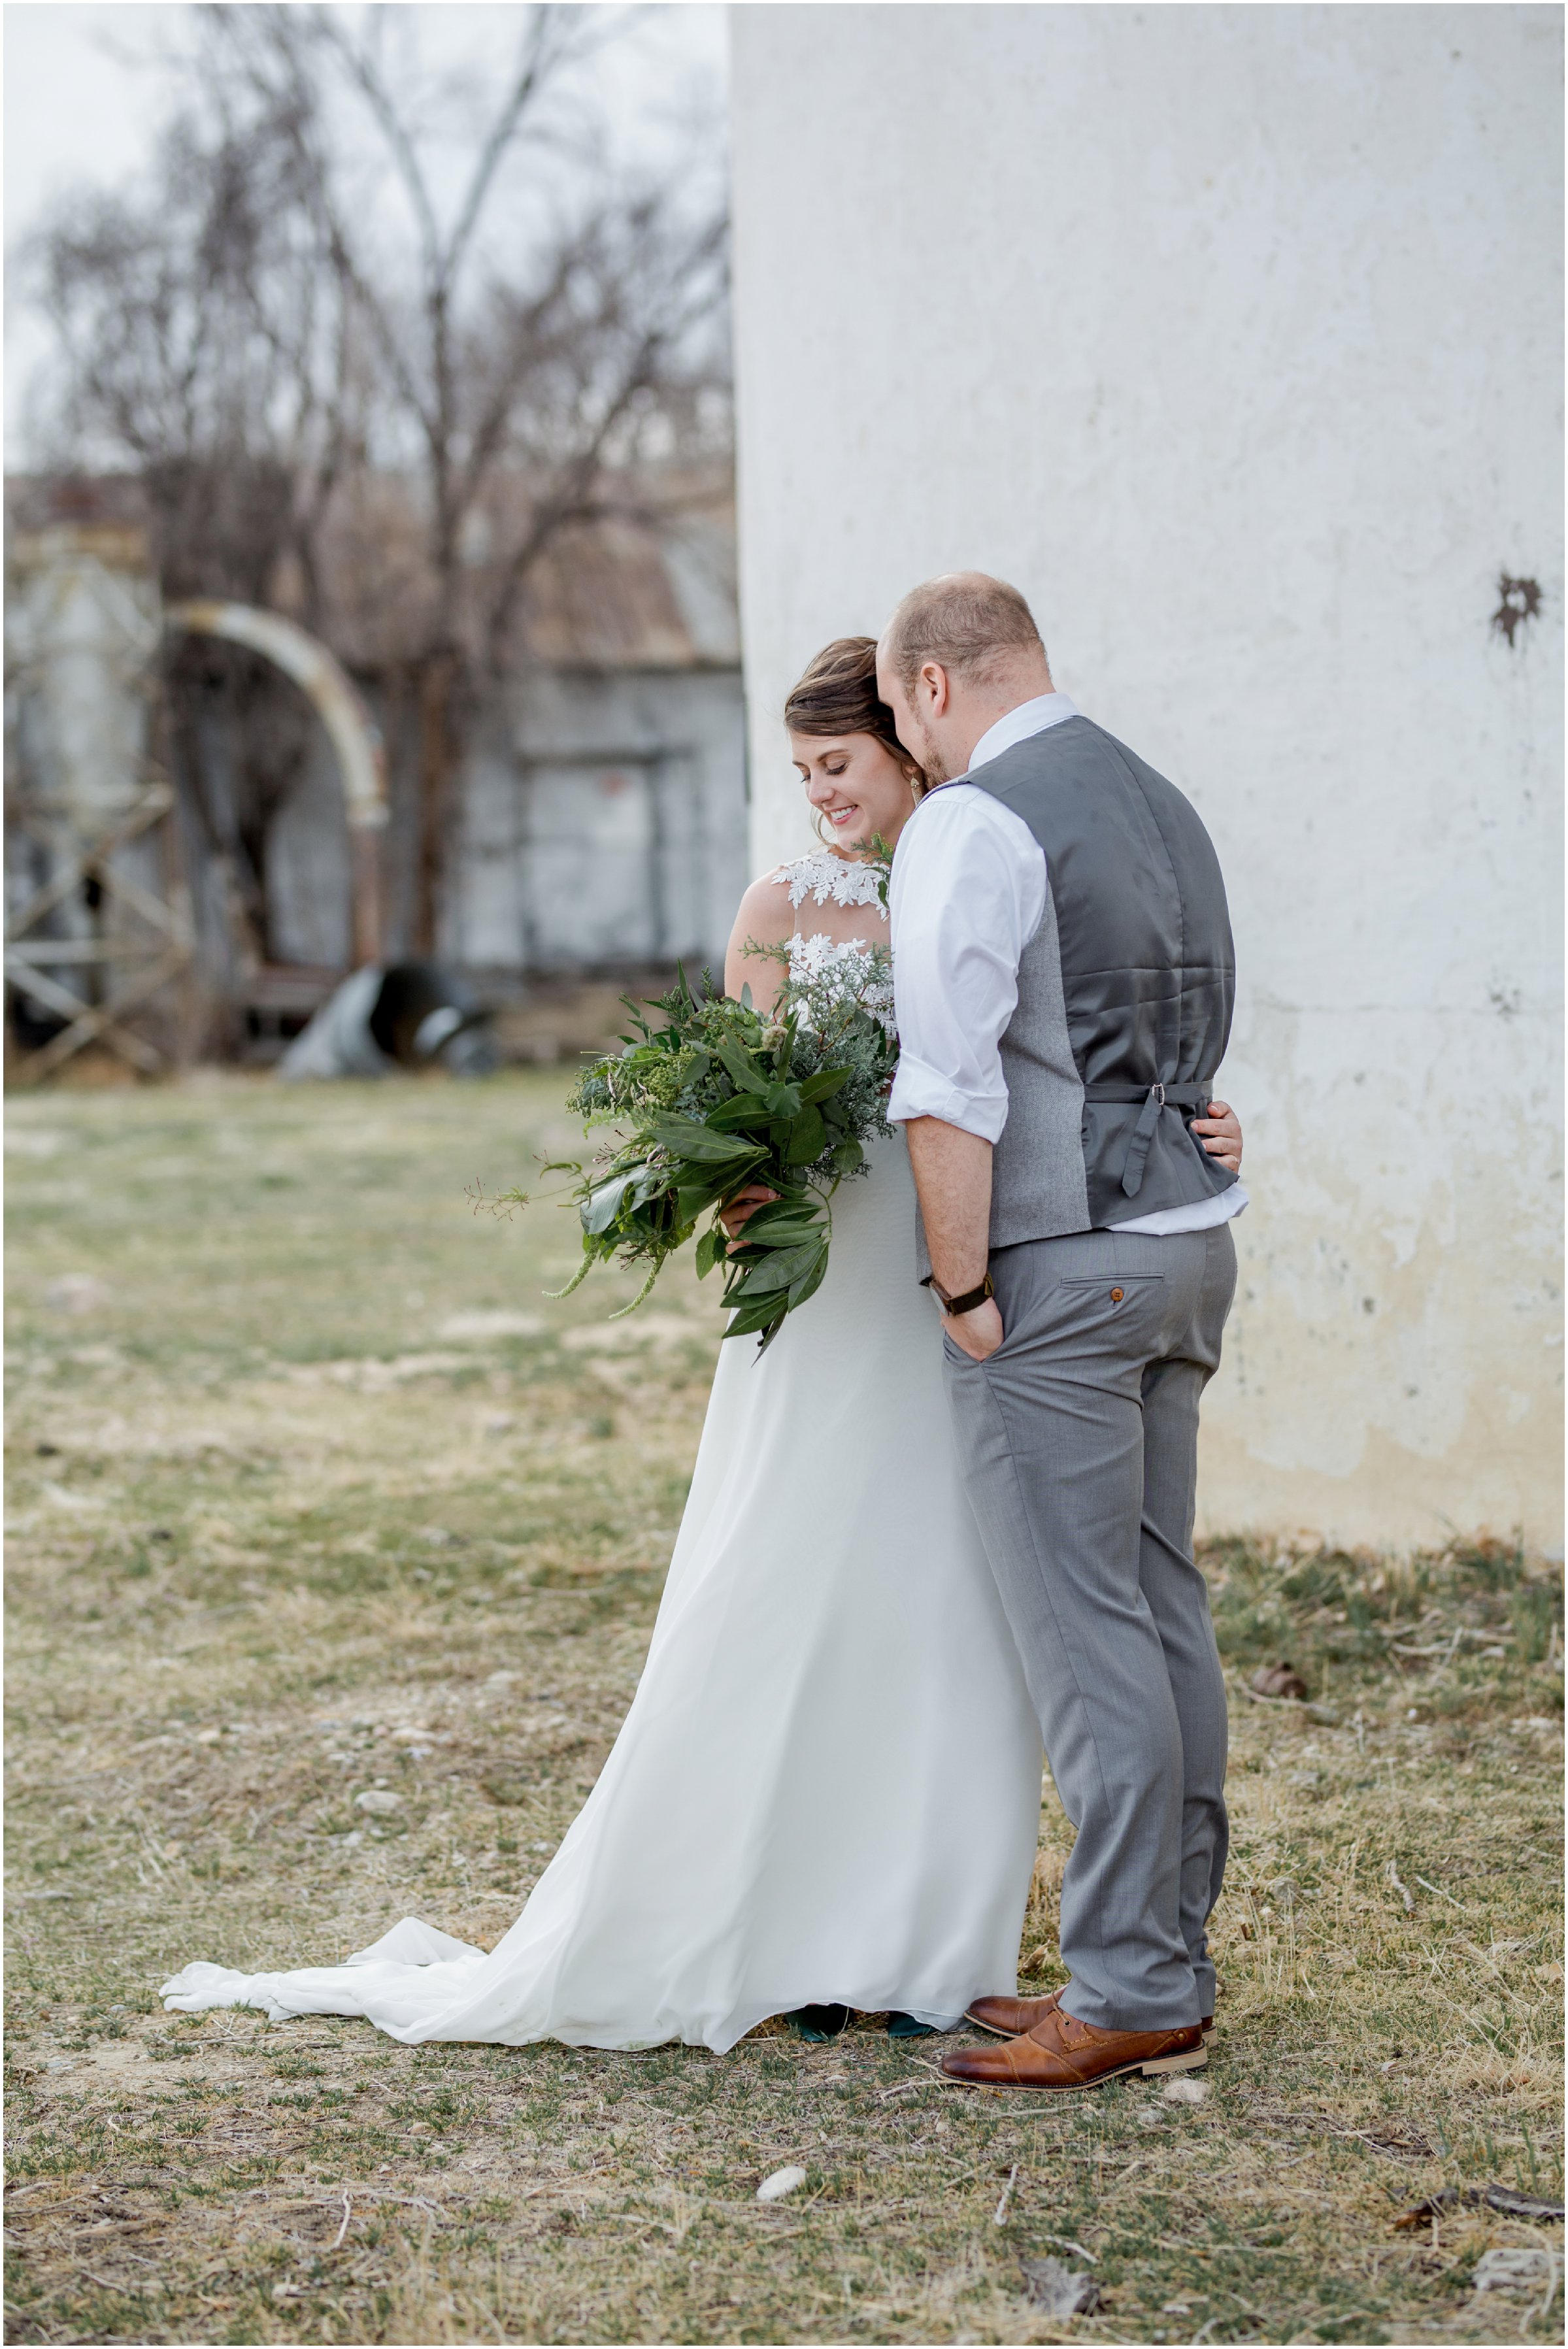 Longmont, Colorado Wedding At The St. Vrain by Greeley, Colorado Wedding Photographer